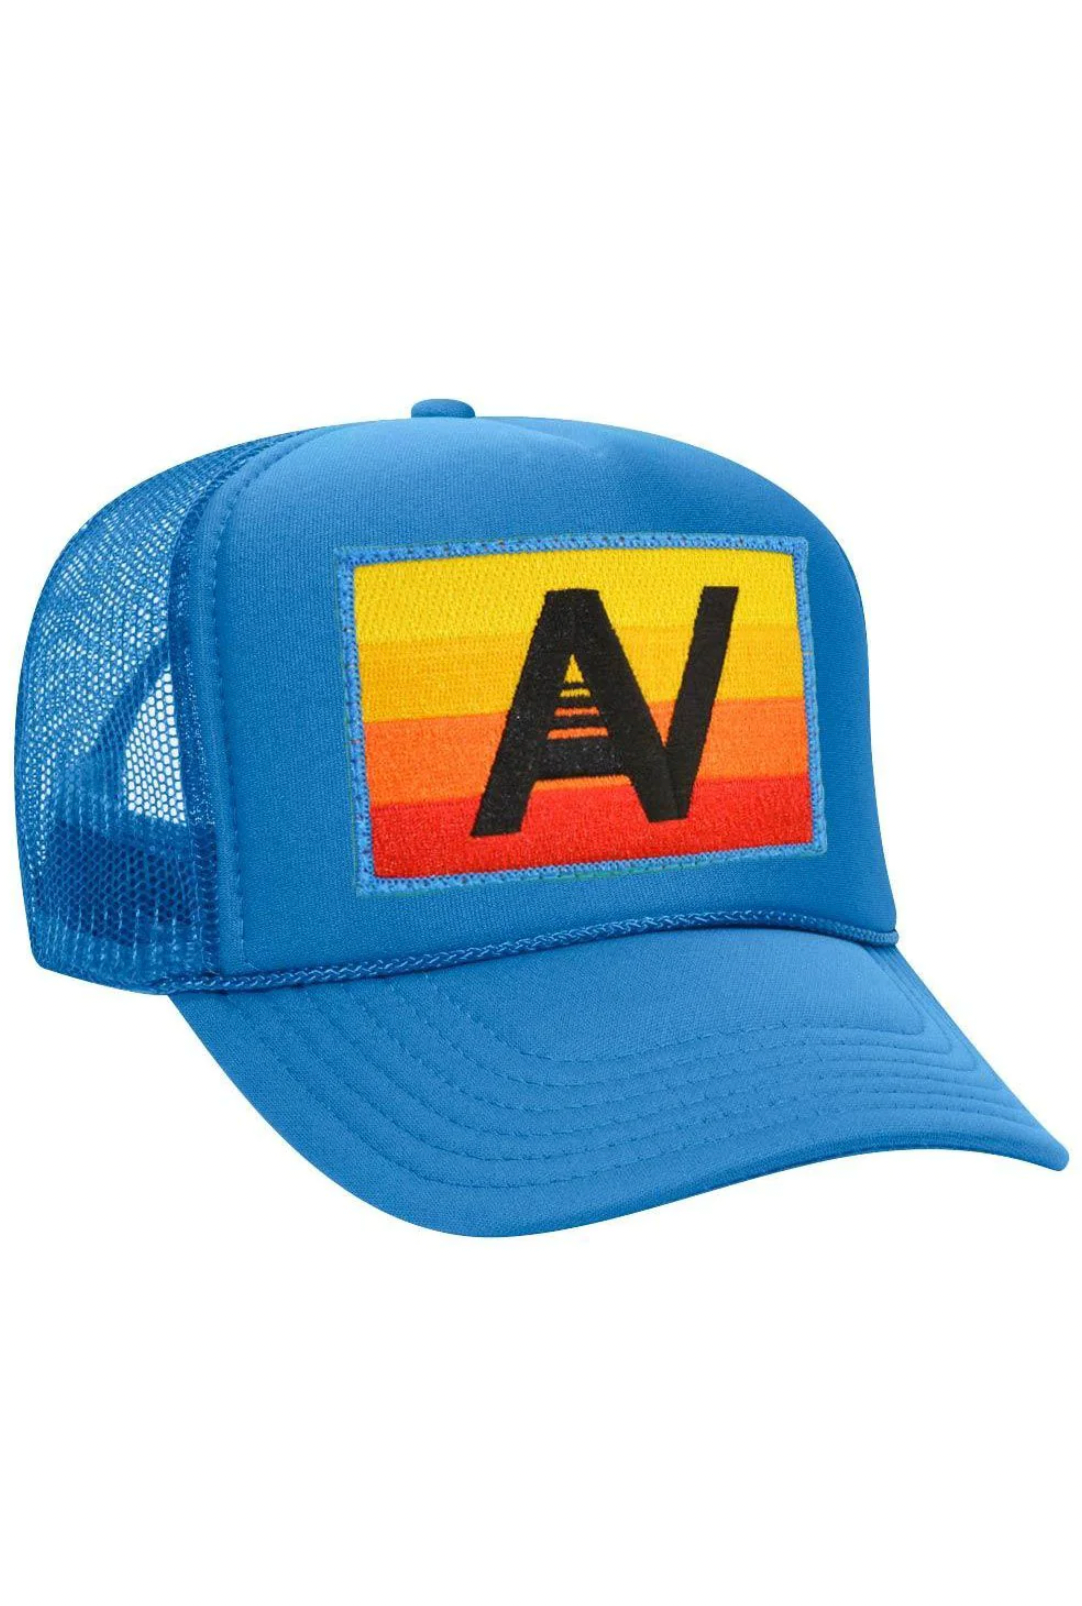 Aviator Nation Vintage Low Rise Trucker Hat